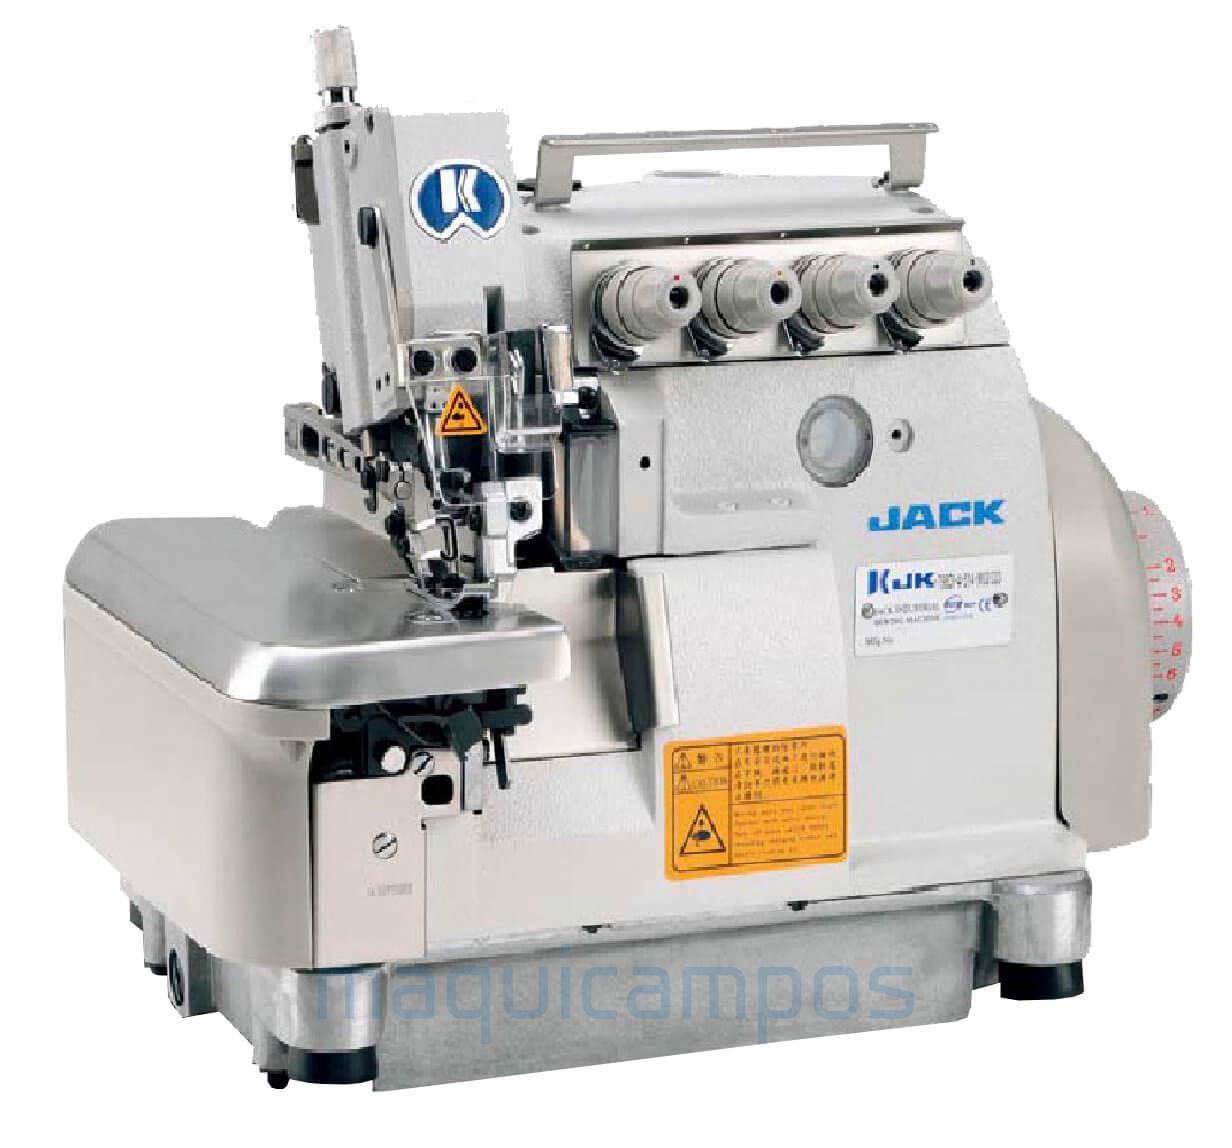 Jack JK-798BDI-4 Overlock Sewing Machine